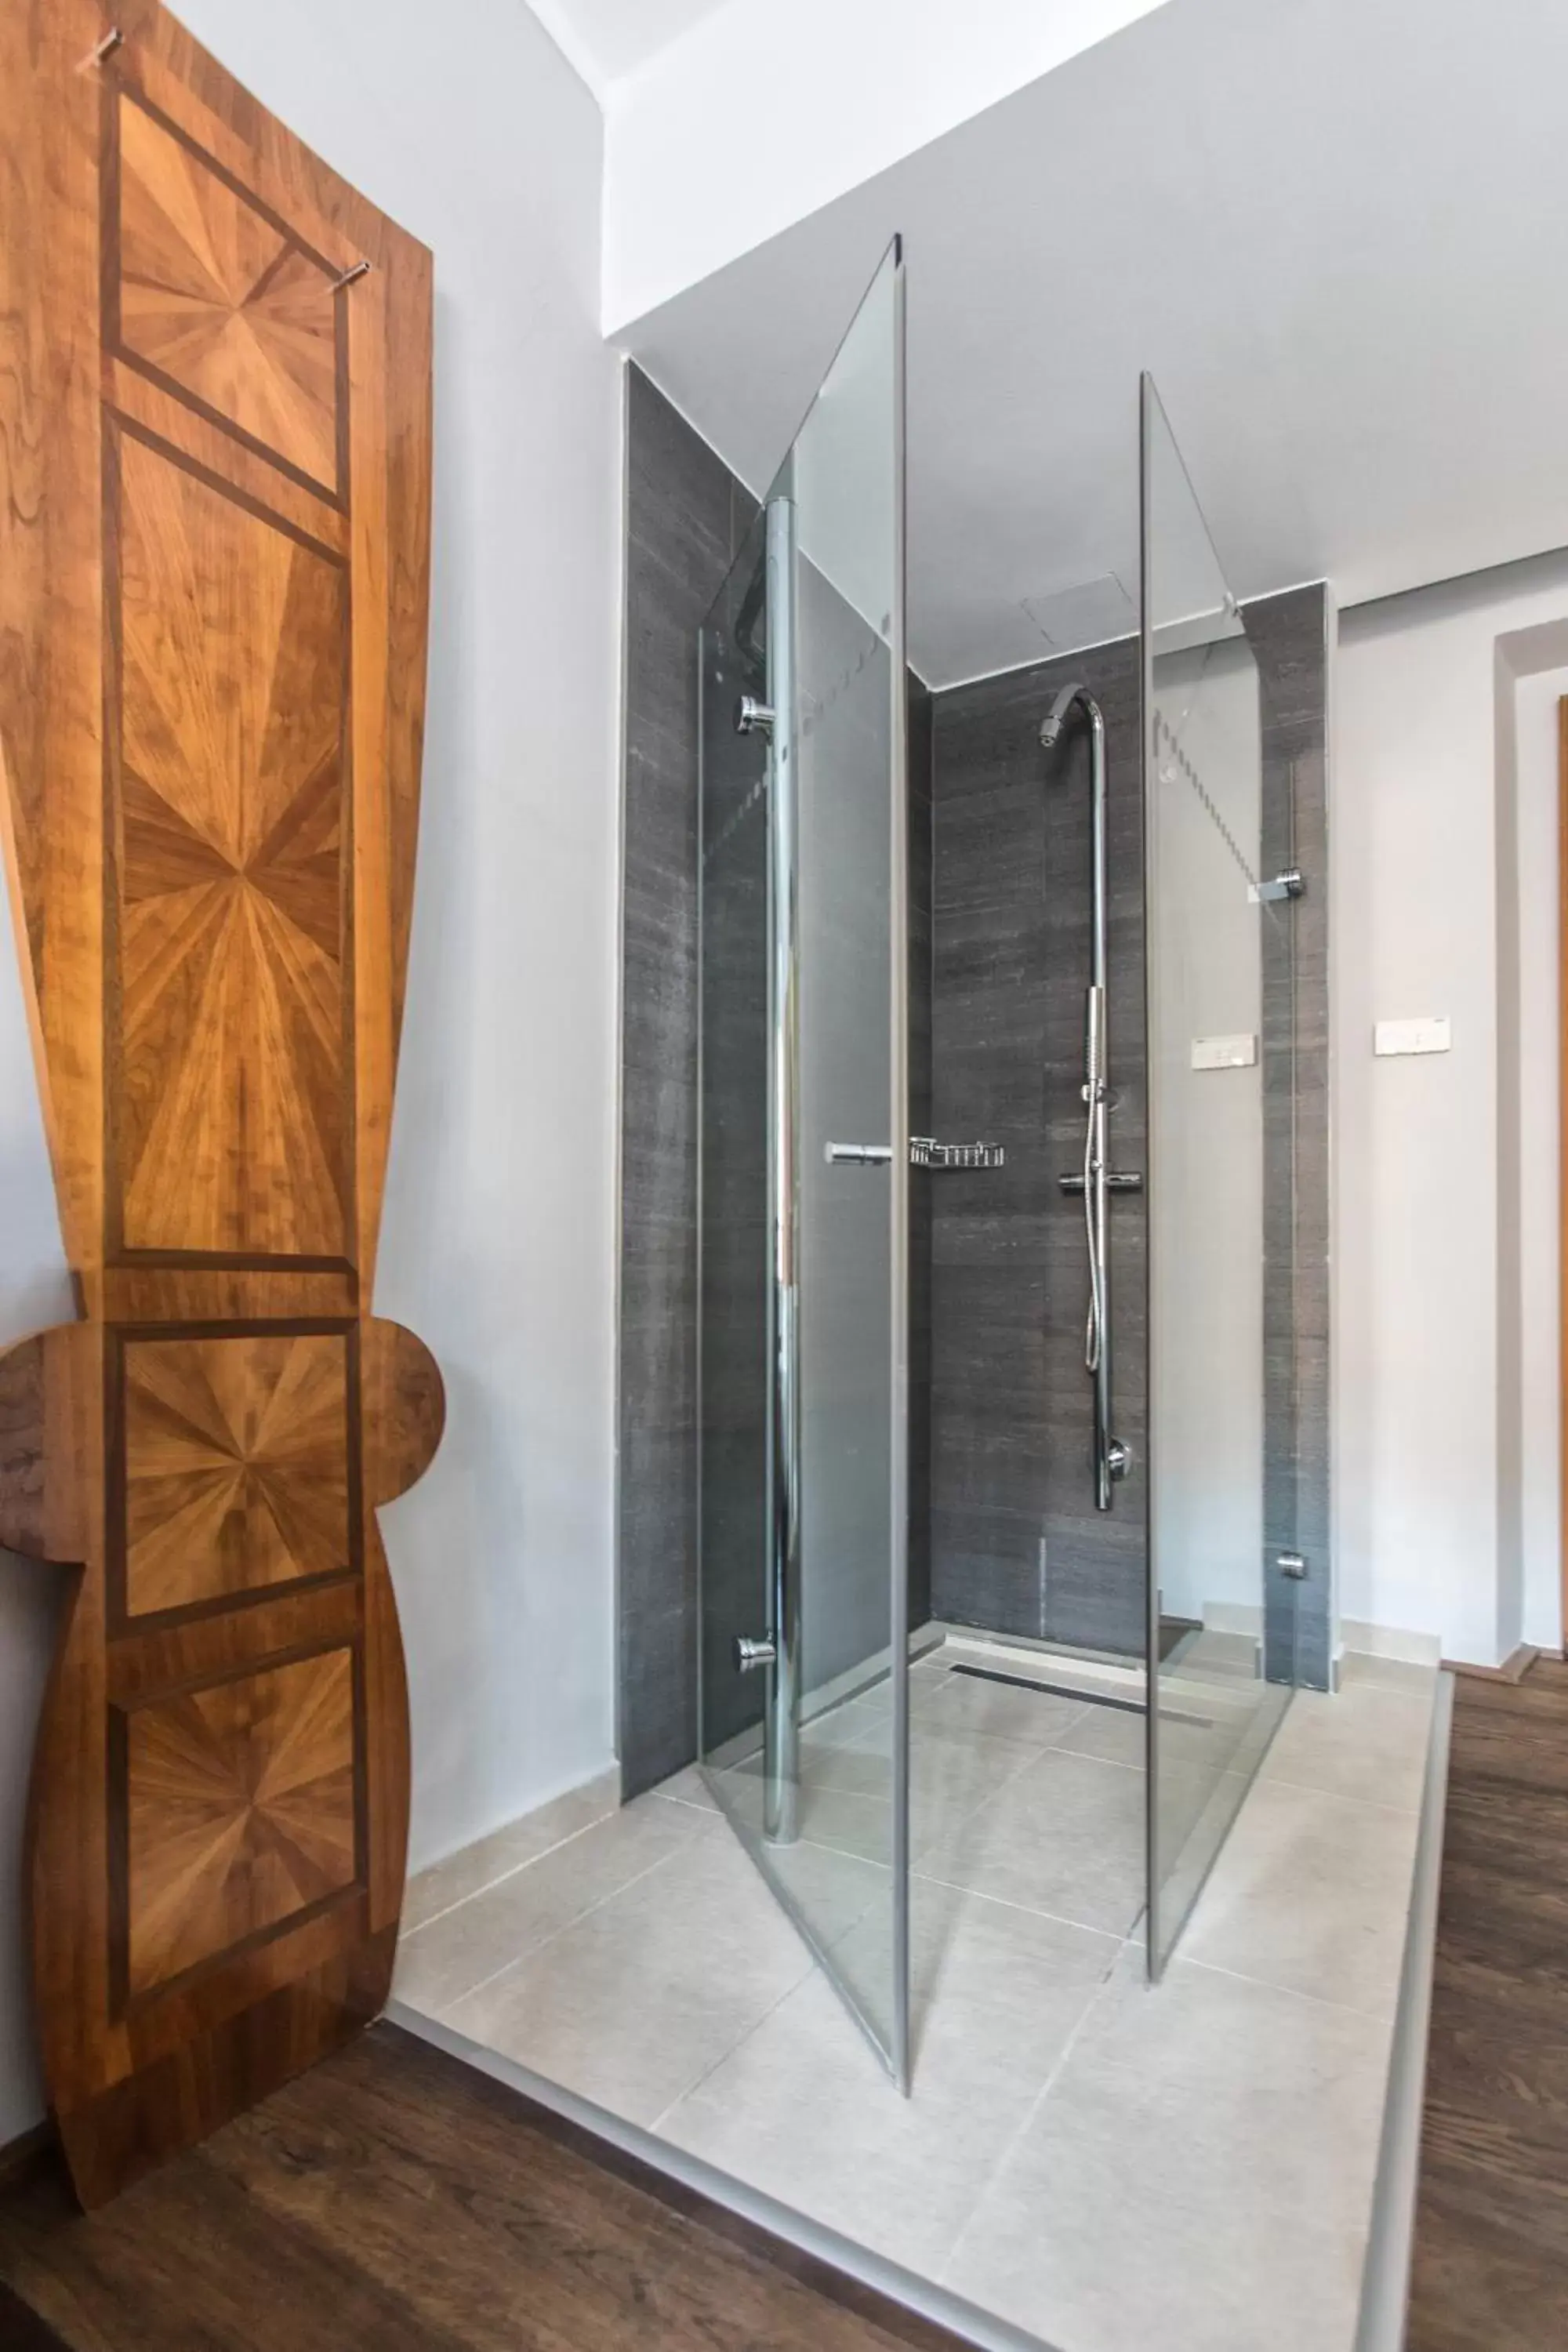 Photo of the whole room, Bathroom in Design Hotel Neruda